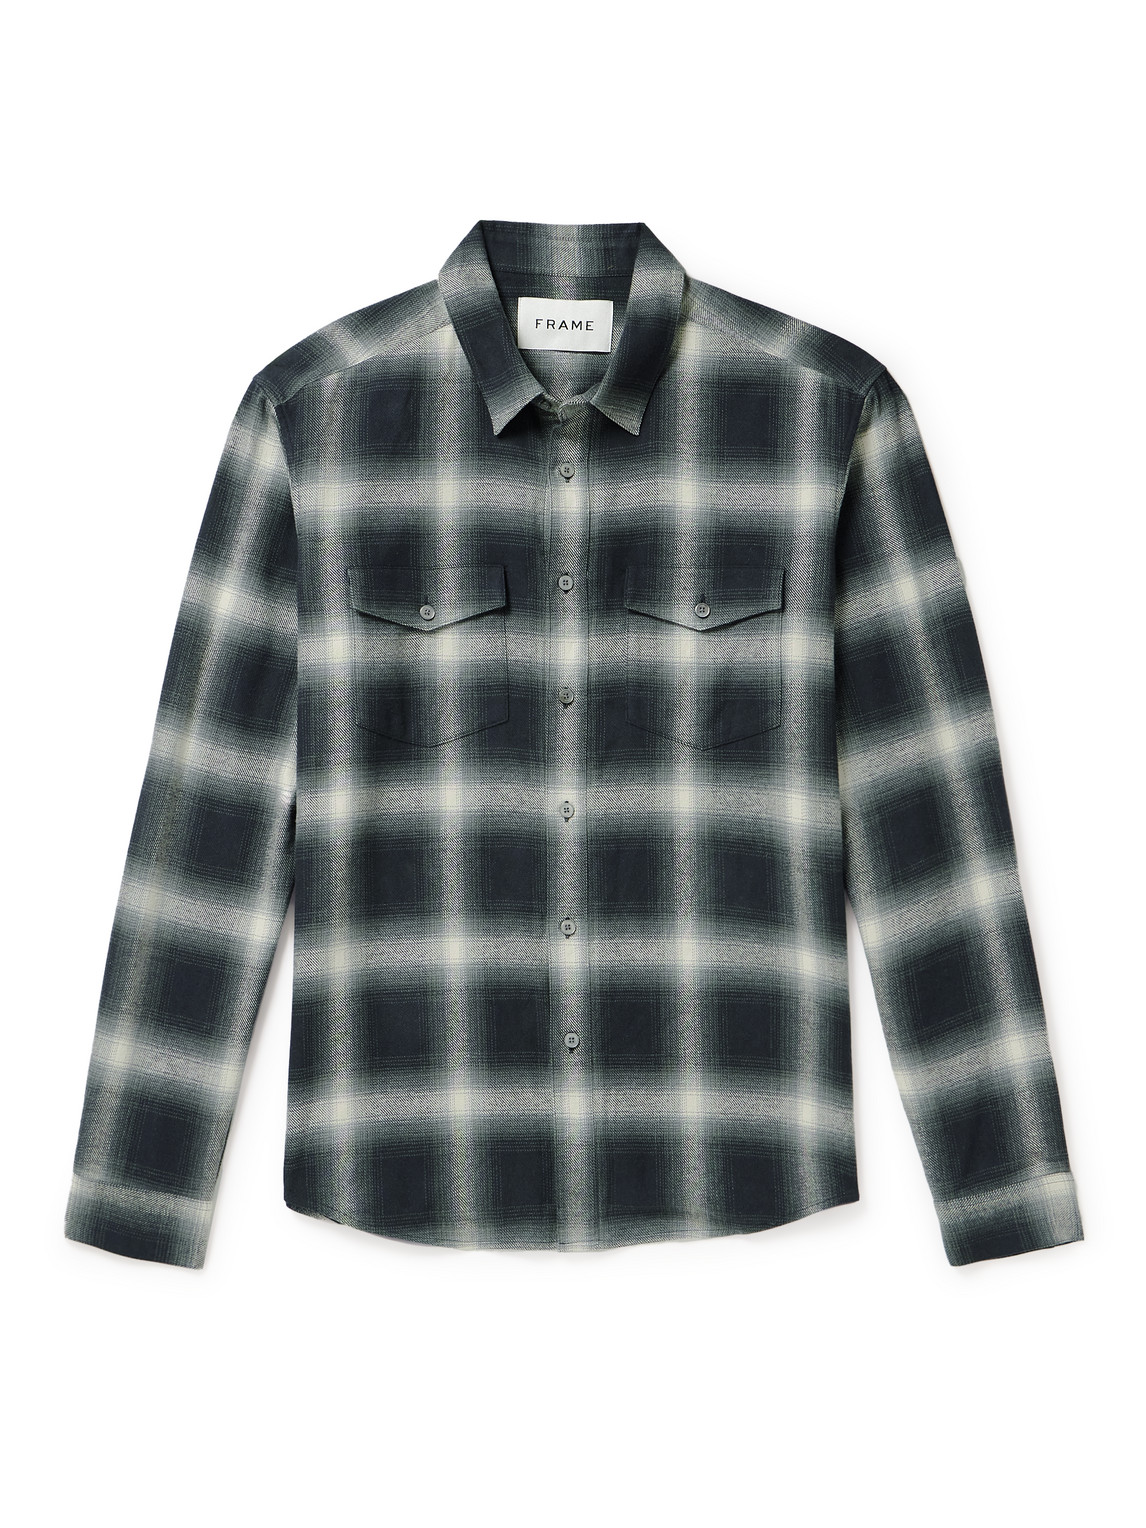 FRAME - Checked Brushed Cotton-Flannel Shirt - Men - Gray - M von FRAME